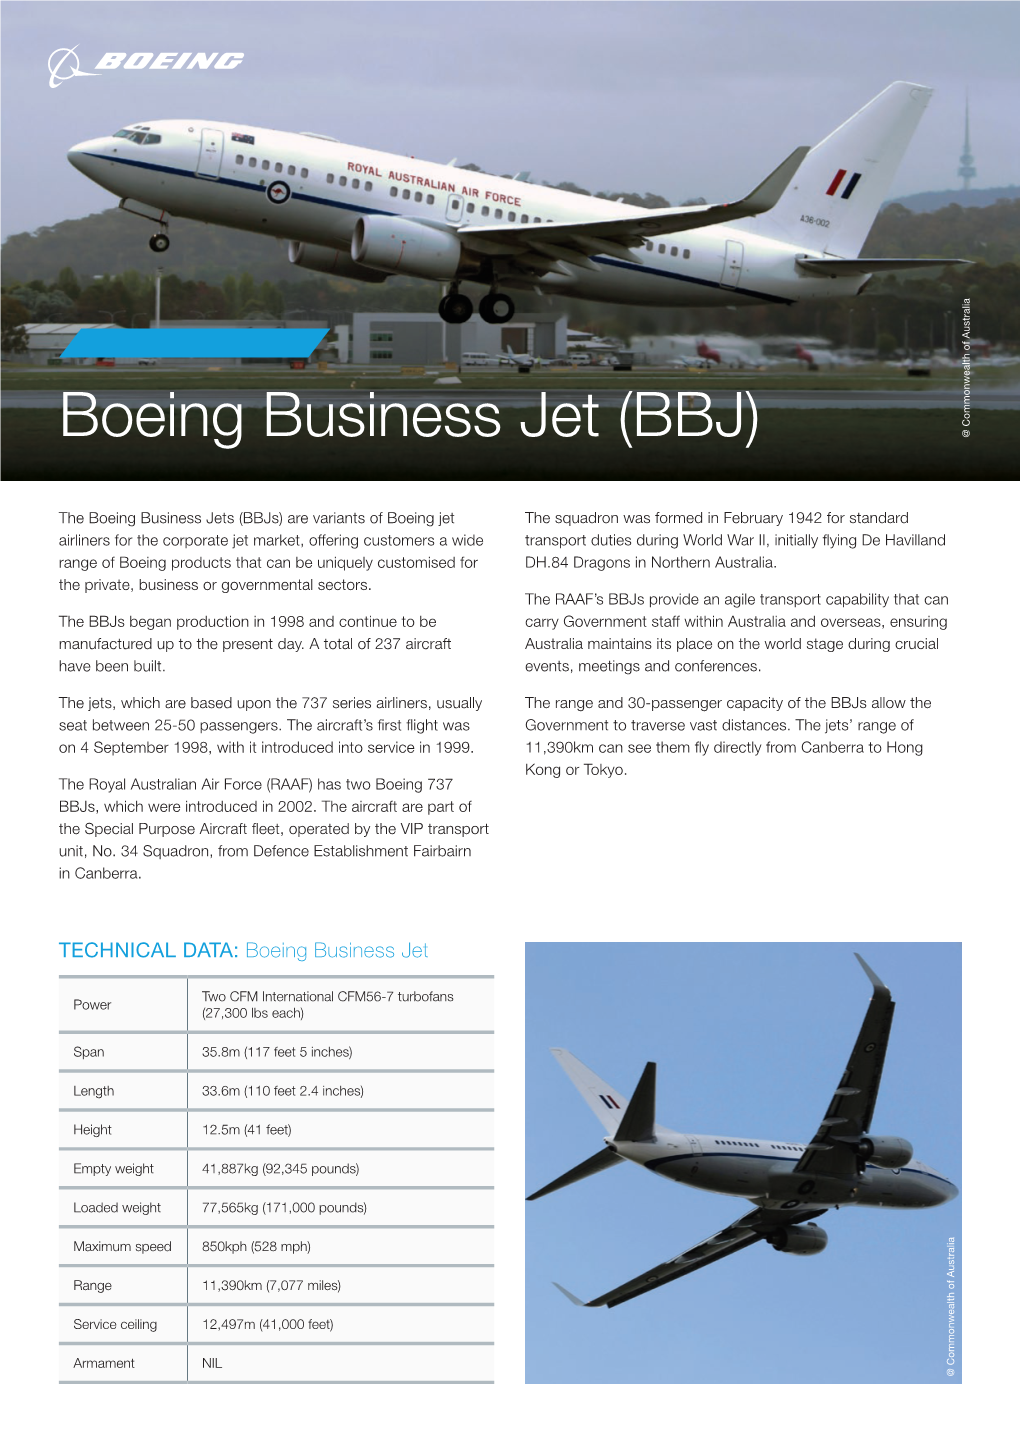 Boeing Business Jet (BBJ) @ Commonwealth of Australia